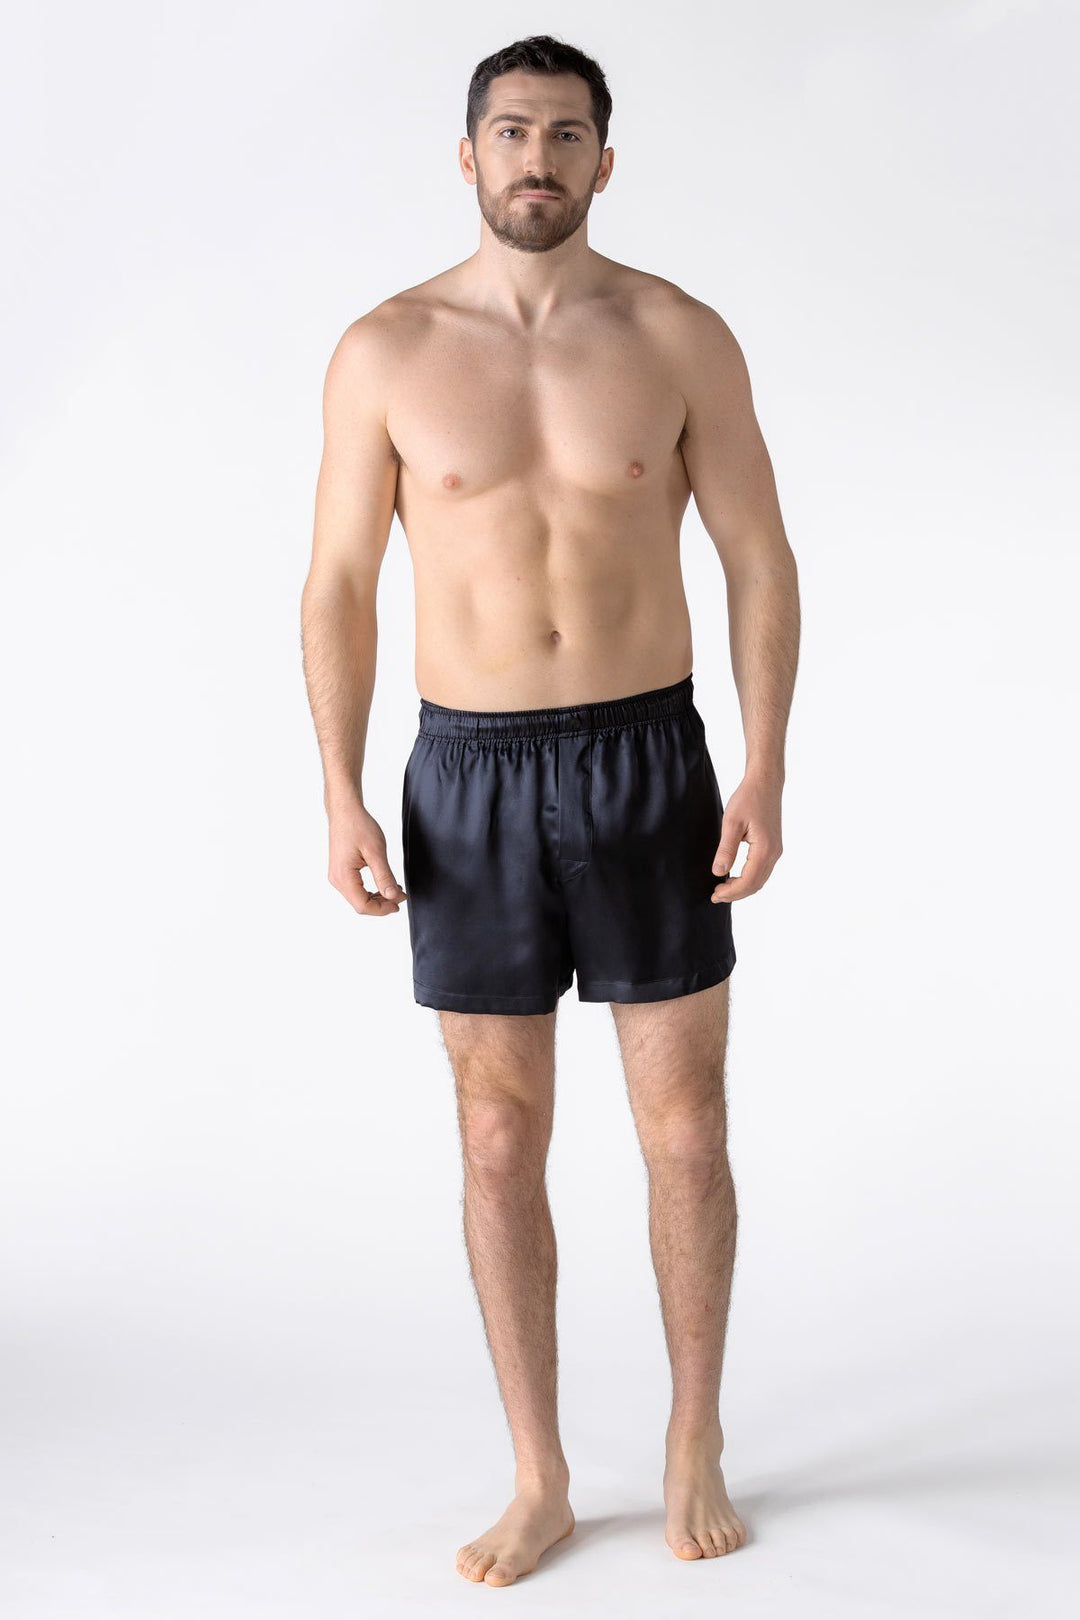 Mens Silk Boxers Pure Silk Boxer Shorts Mens Underwear Pj's Shorts